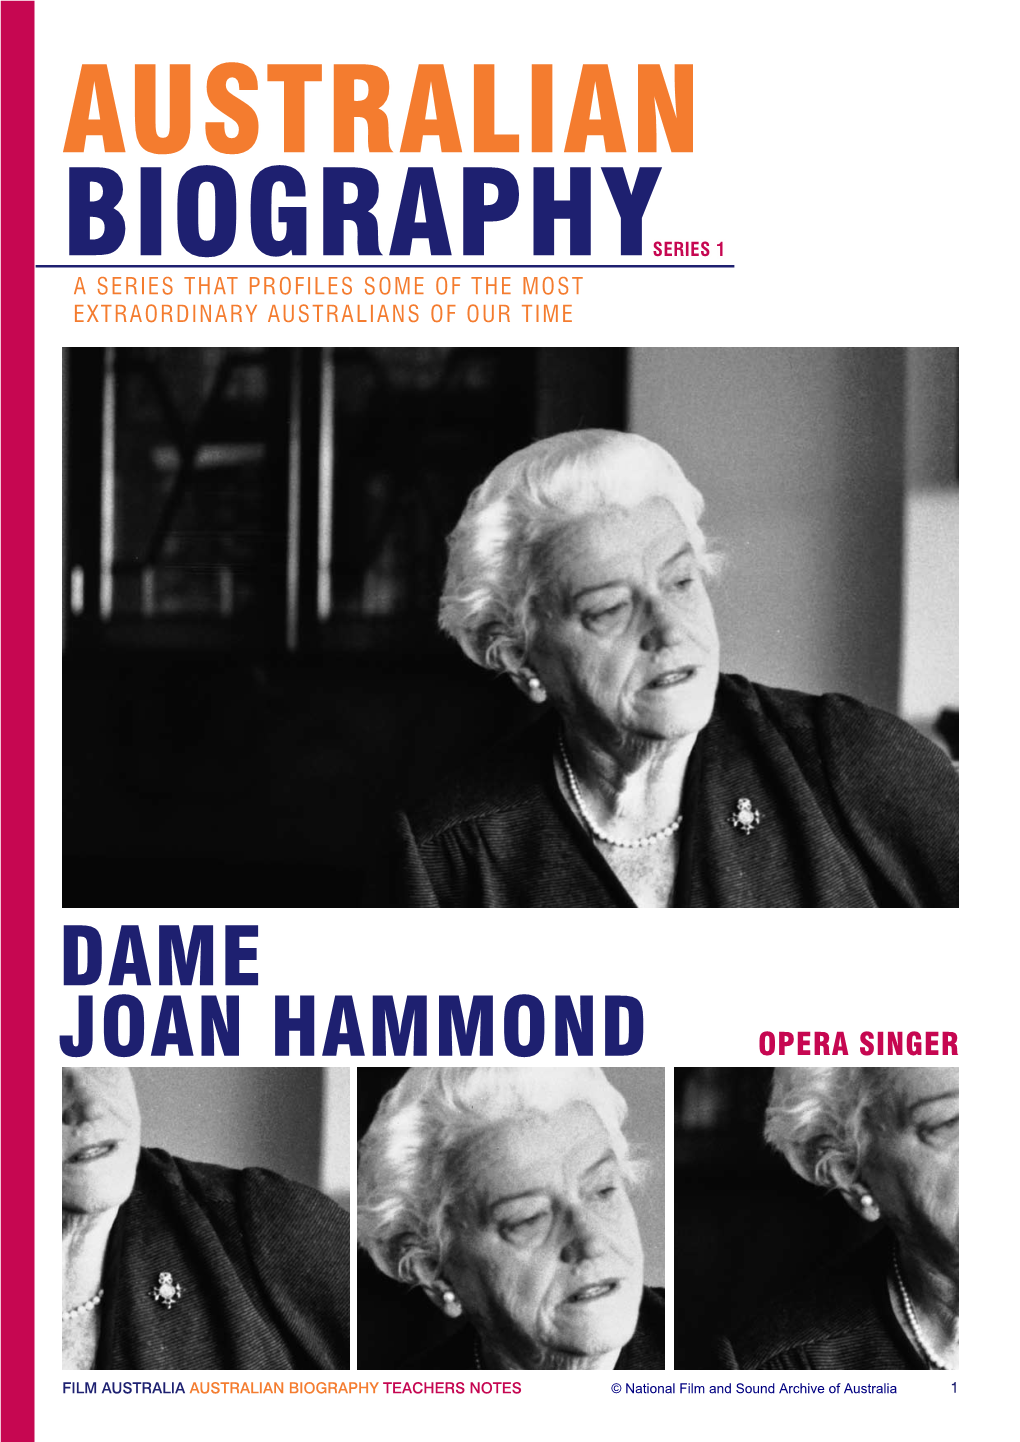 Dame Joan Hammond Opera Singer